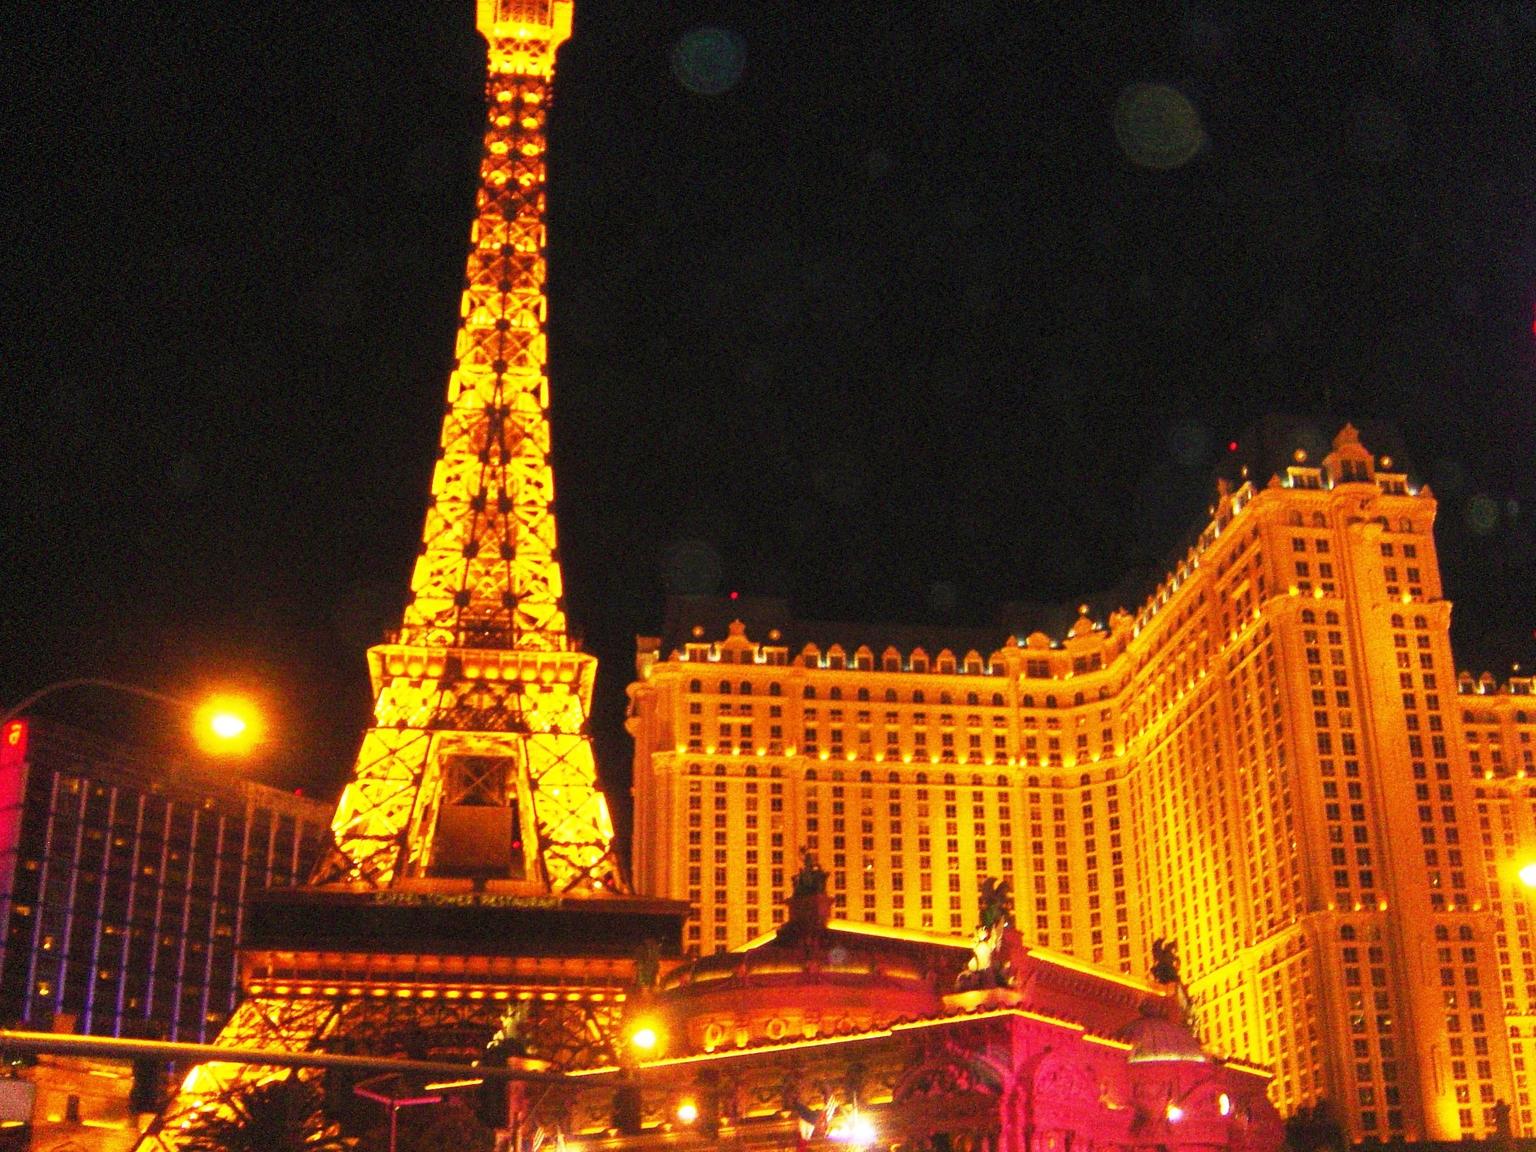 Eiffel Tower Viewing Deck at Paris Las Vegas, Las Vegas, NV - UNITED STATES